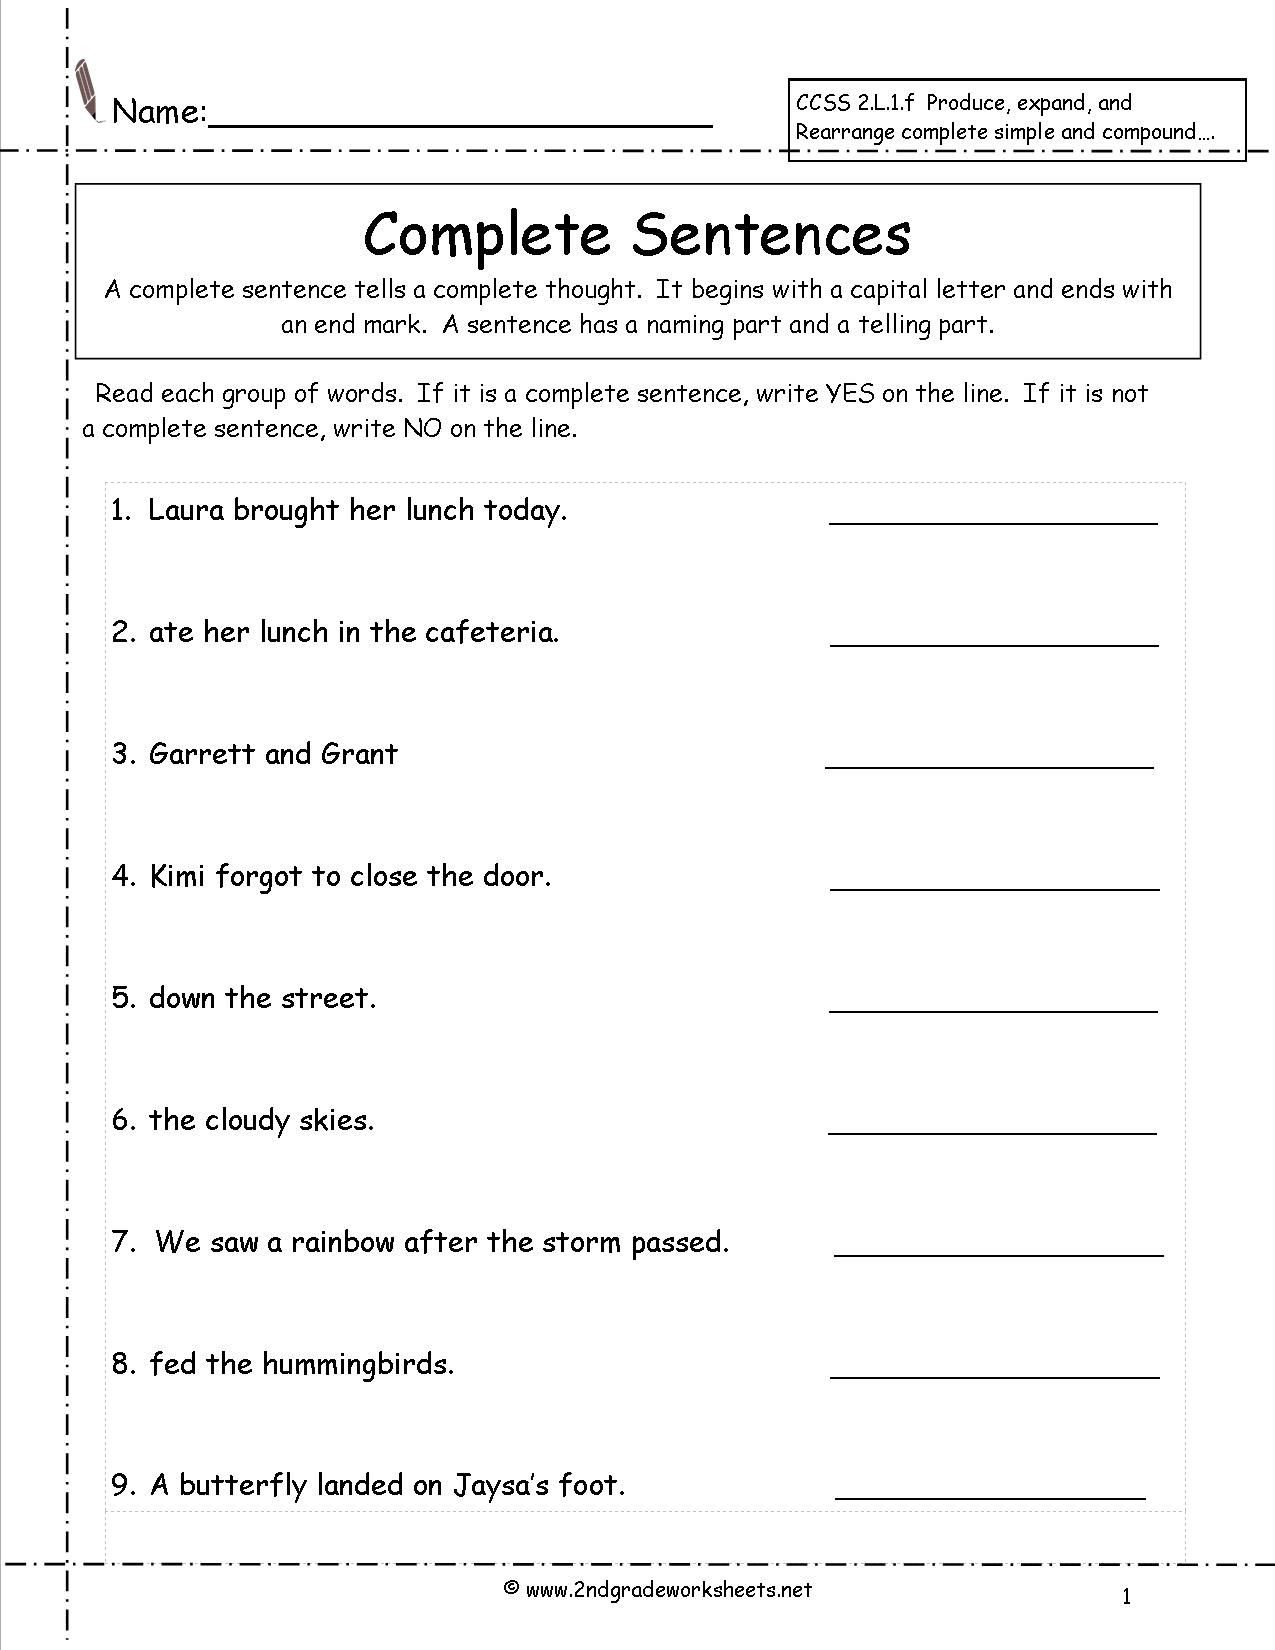 Complete Sentence Worksheets 3rd Grade Second Grade Sentences Worksheets Ccss 2 L 1 F Worksheets